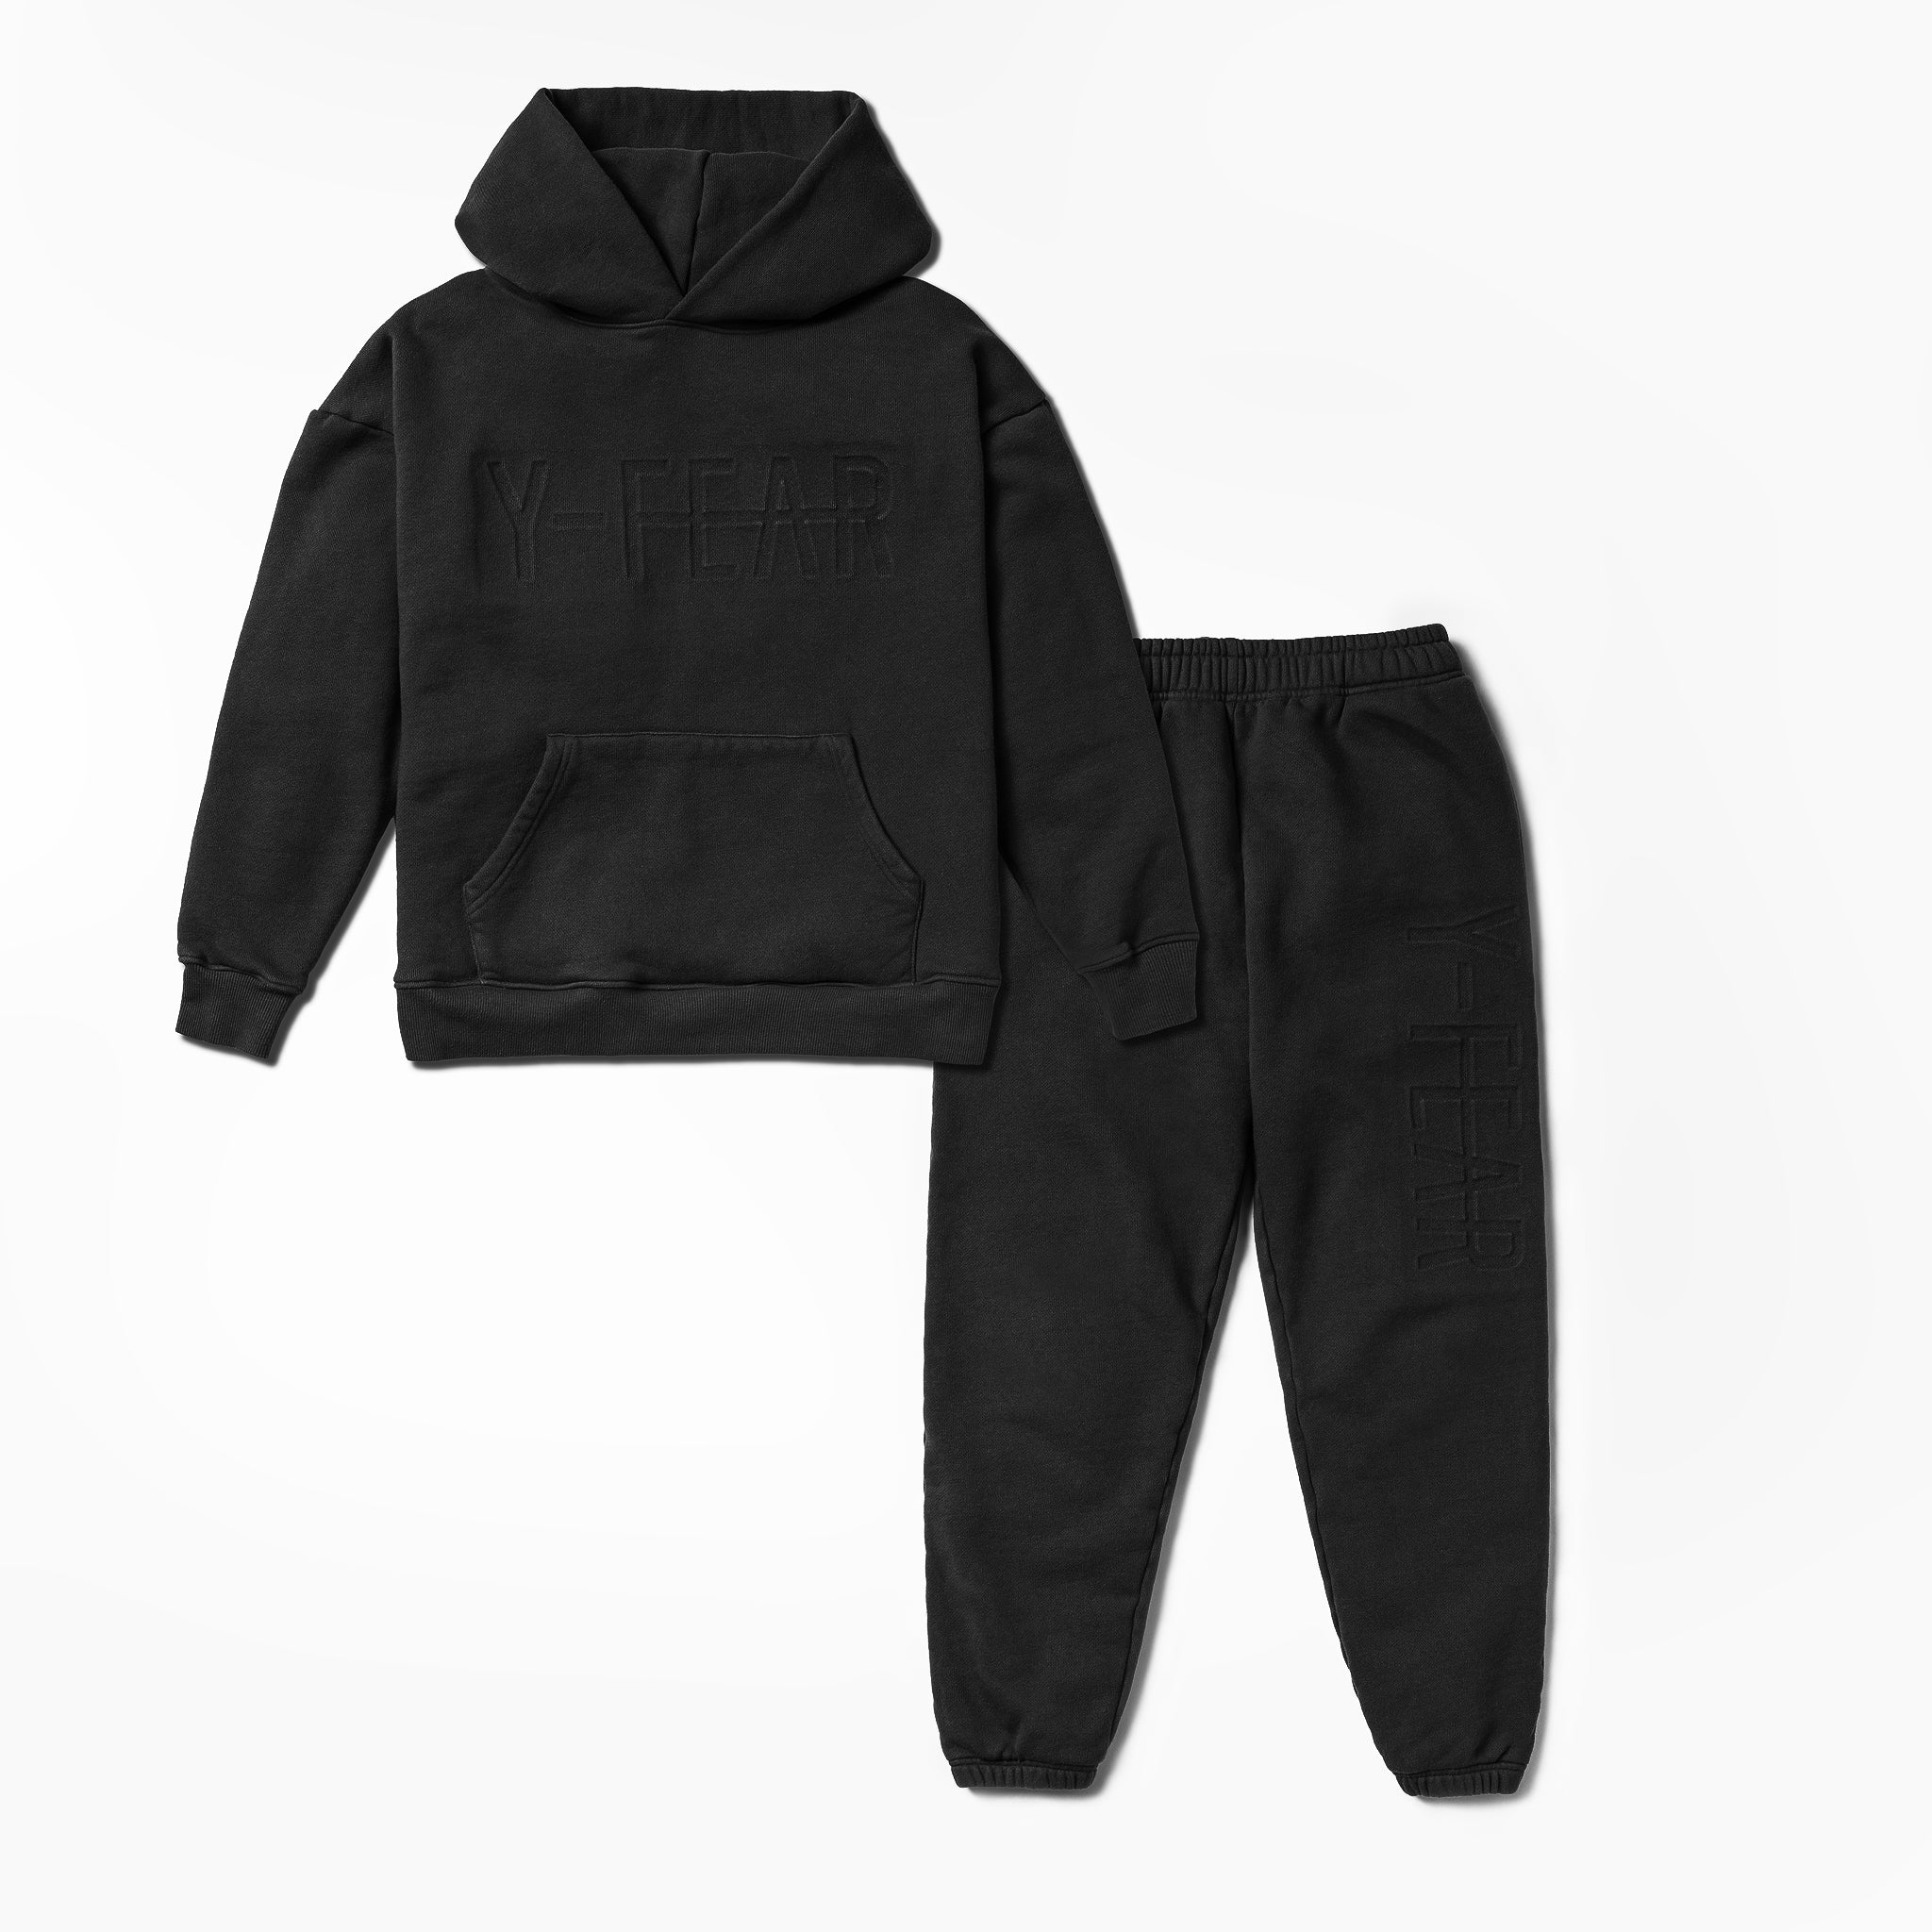 Black Ink Sweatsuit